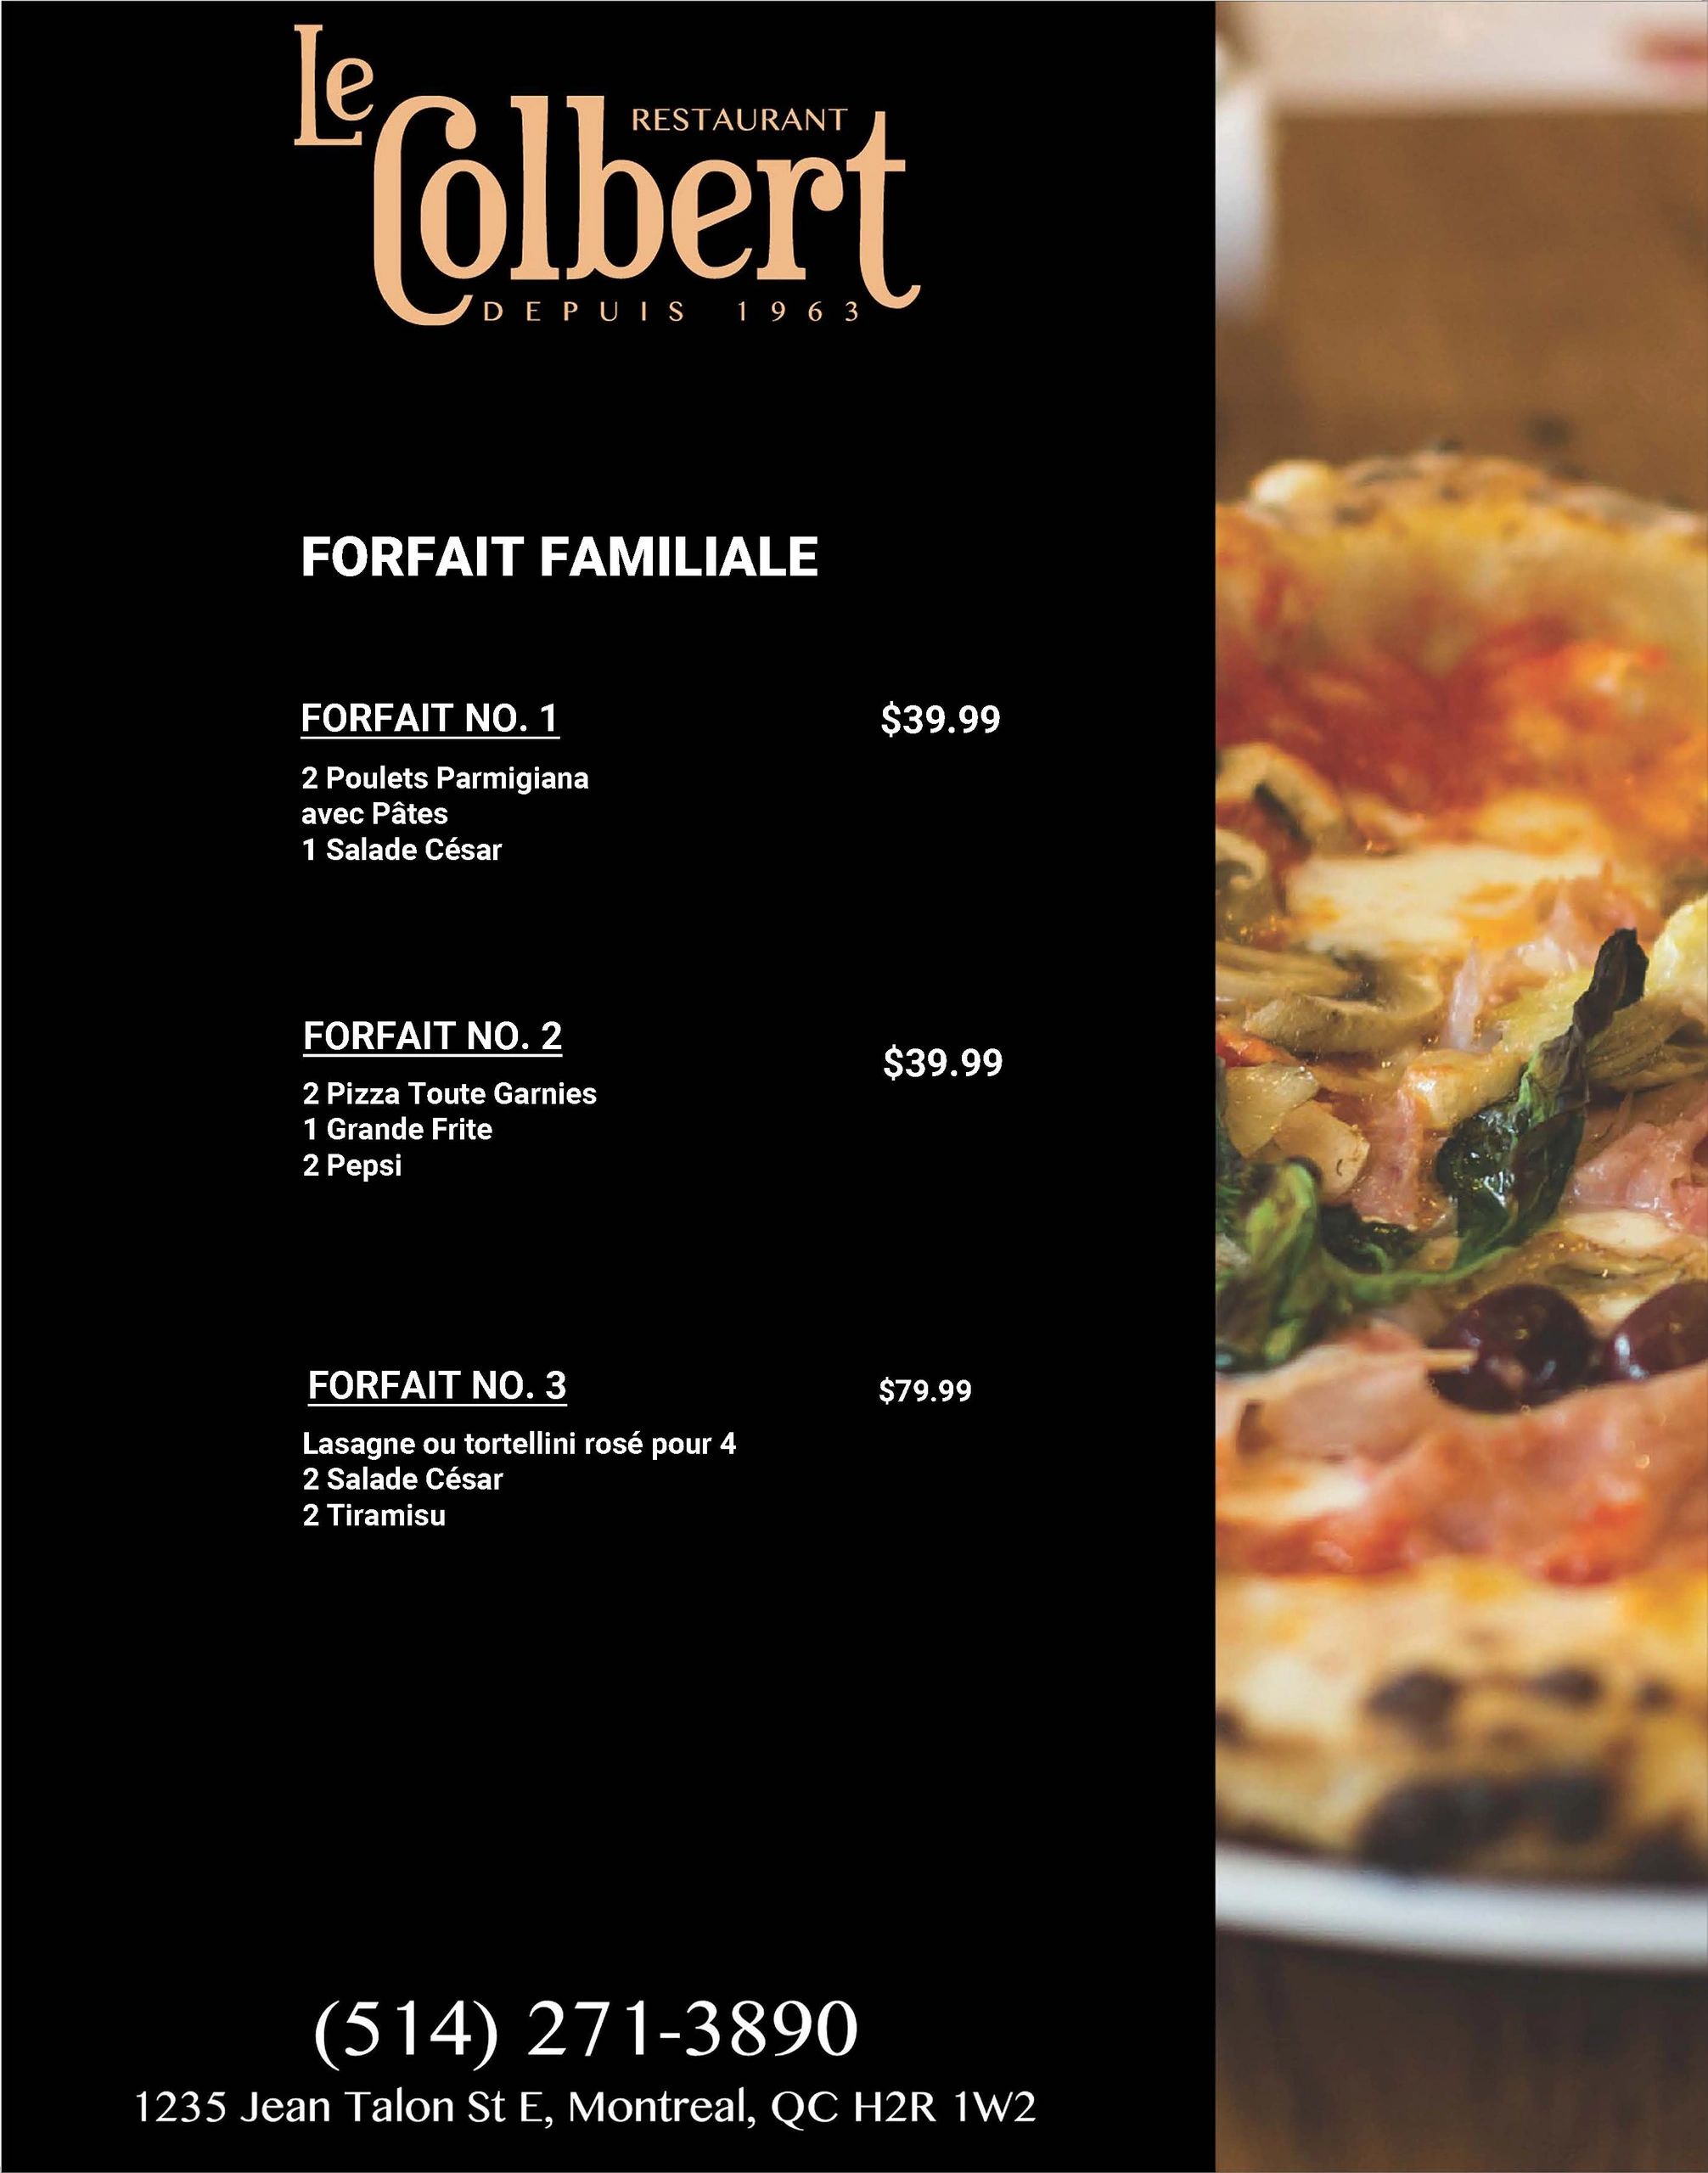 Pizza, Pasta - Restaurant Le Colbert - Montreal, Quebec